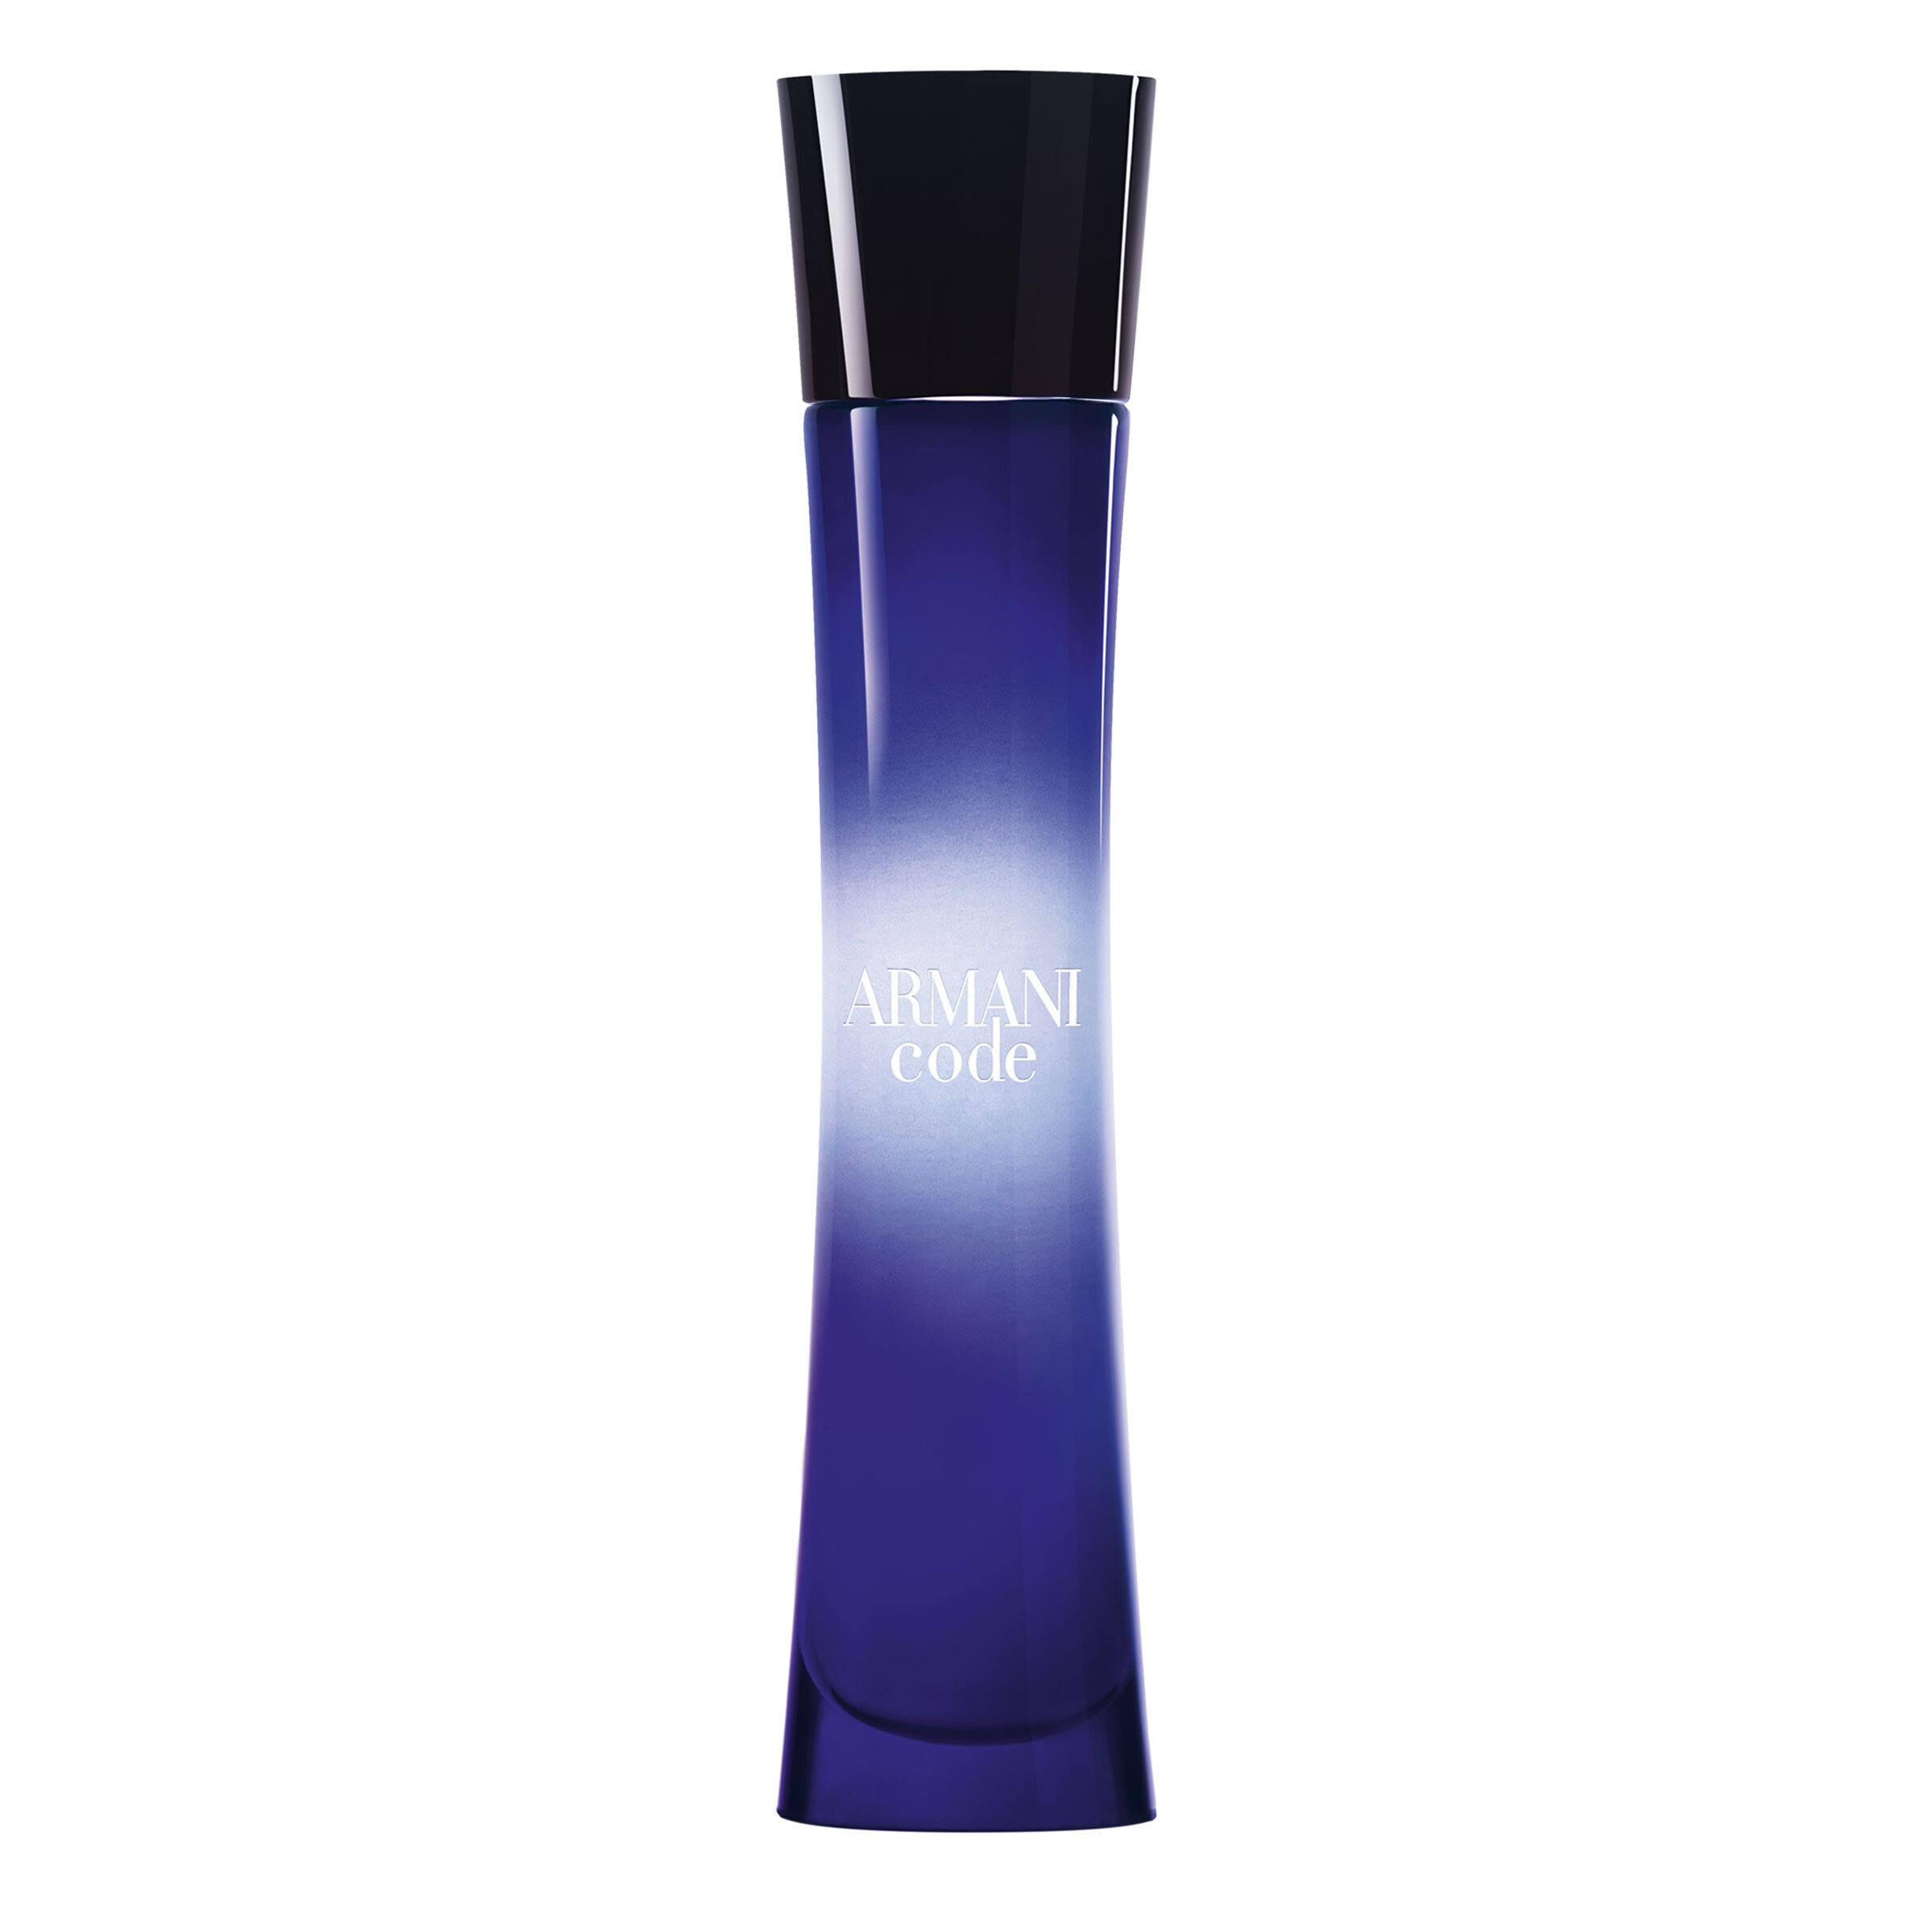 Giorgio Armani Armani Code For Women Eau de Parfum - 50ml